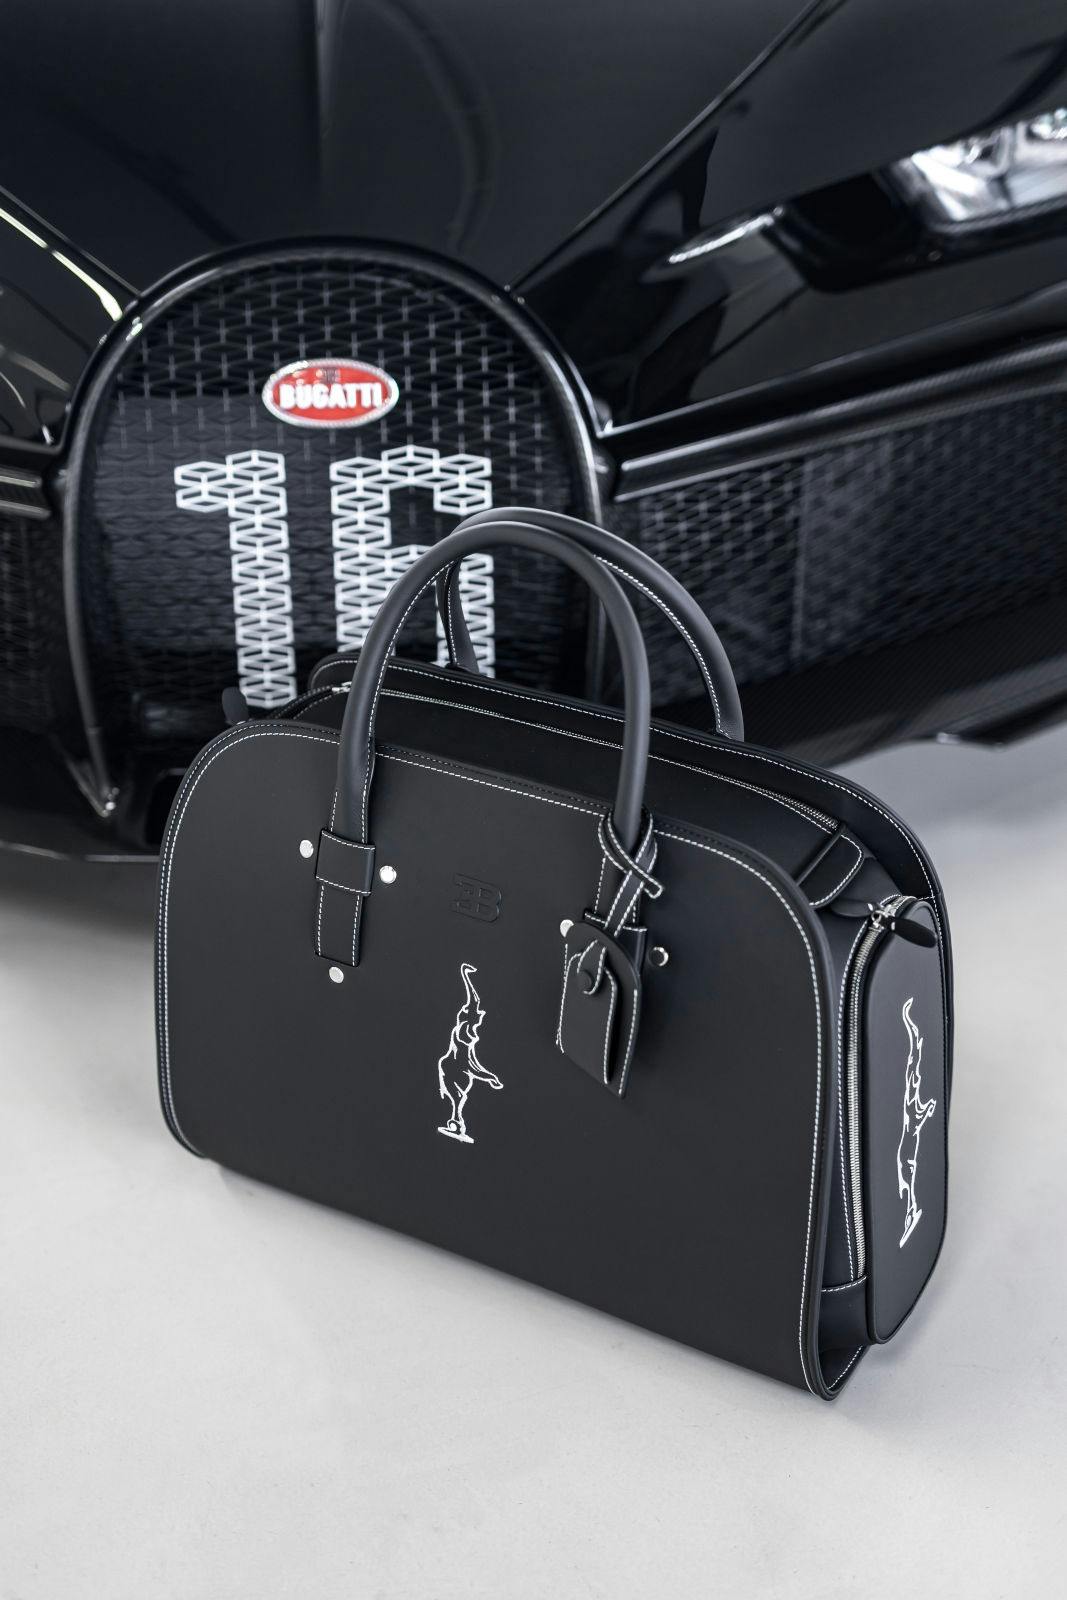 Bugatti by Schedoni : des bagages Chiron sur mesure.